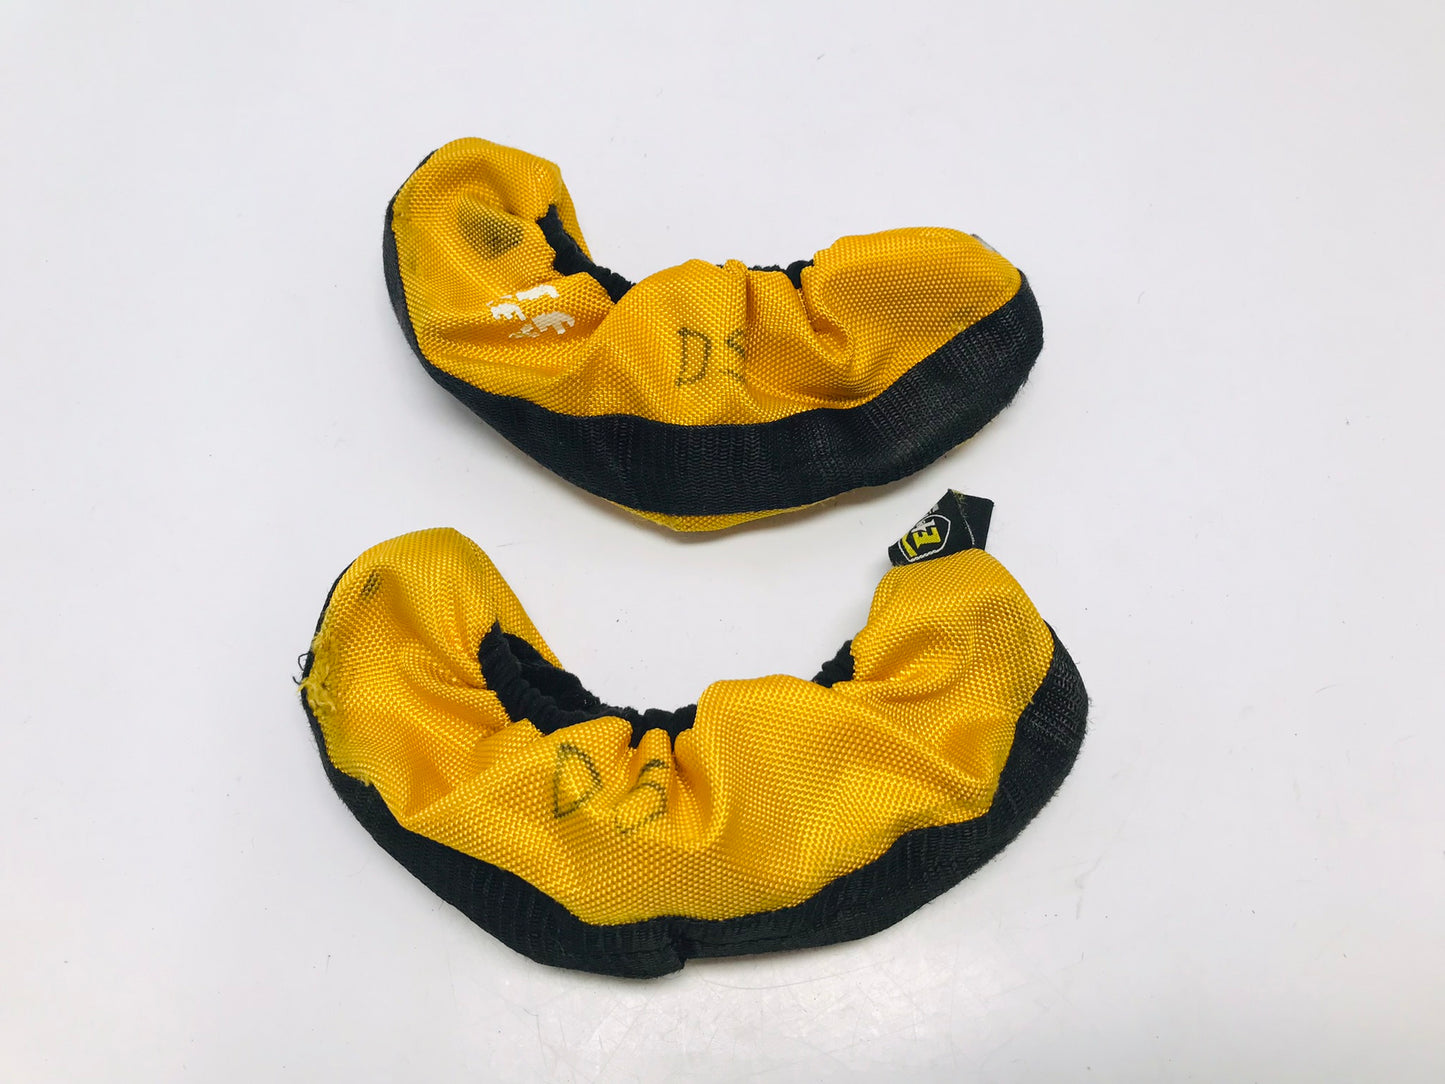 Hockey Skate Guards Black Yellow Terri Cloth Elite Men's Shoe Size 6-12